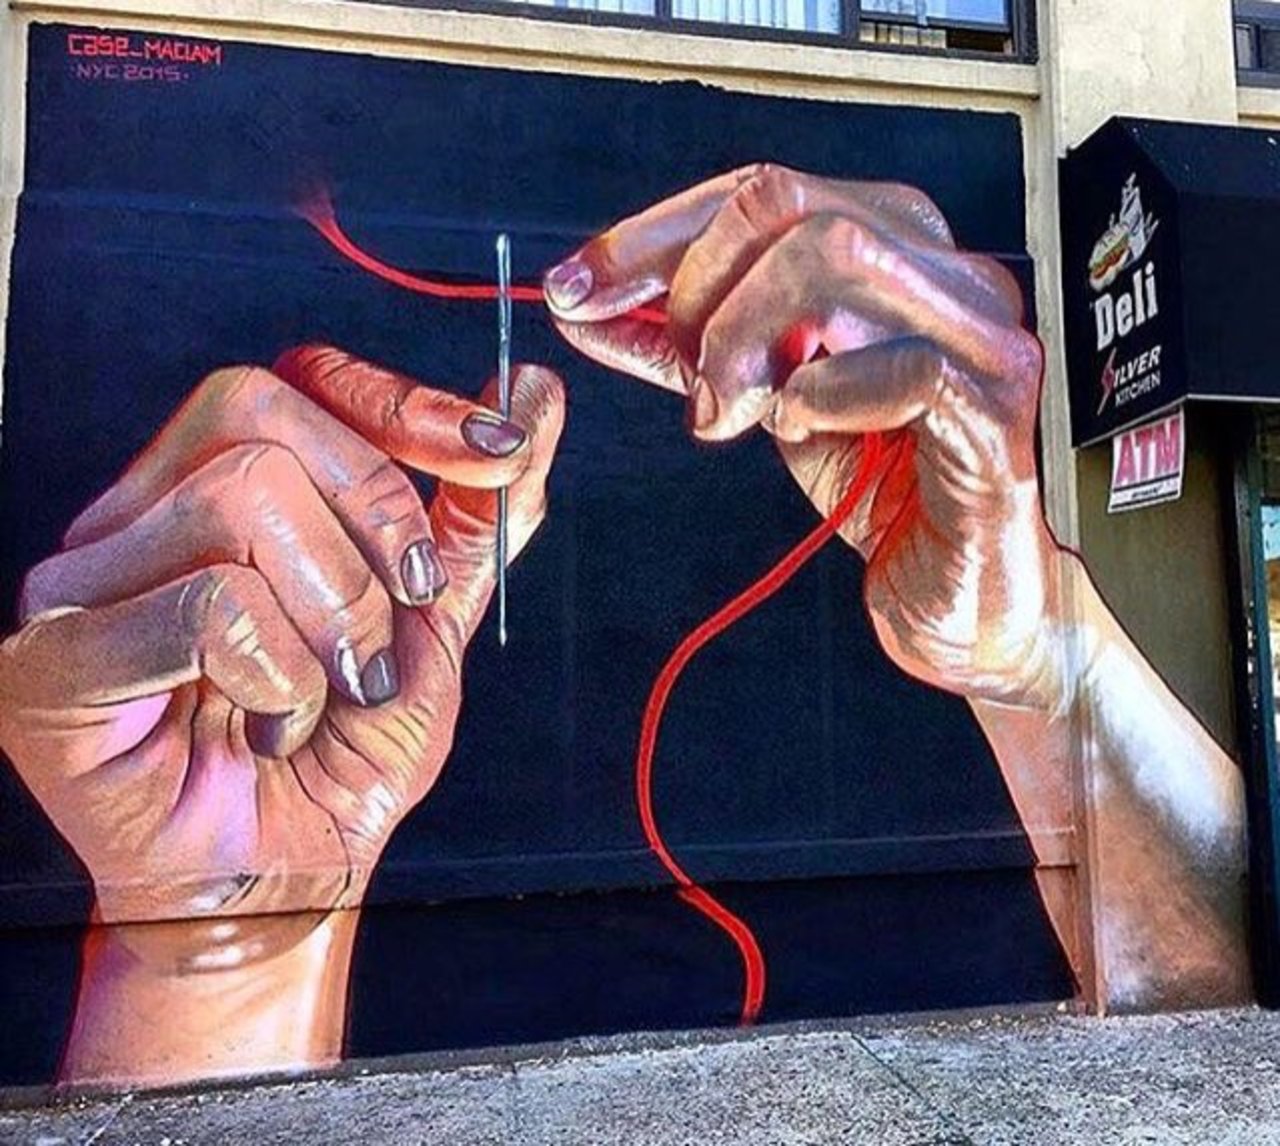 New Street Art by Case Ma'Claim in NYC 

#art #graffiti #mural #streetart https://t.co/4gXAqpqVuL